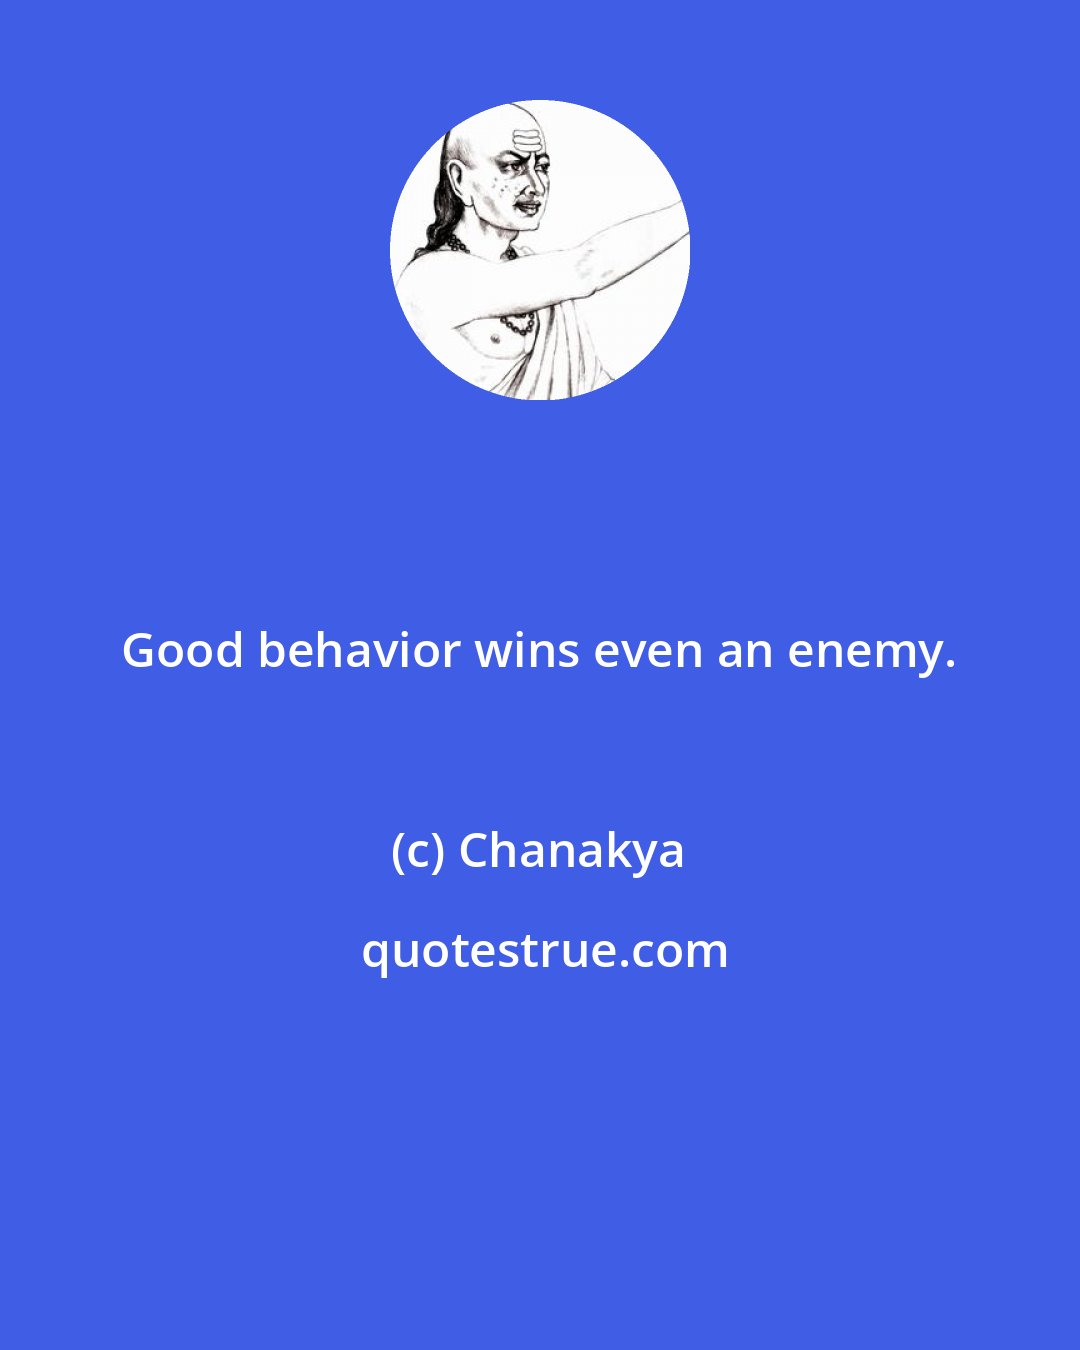 Chanakya: Good behavior wins even an enemy.